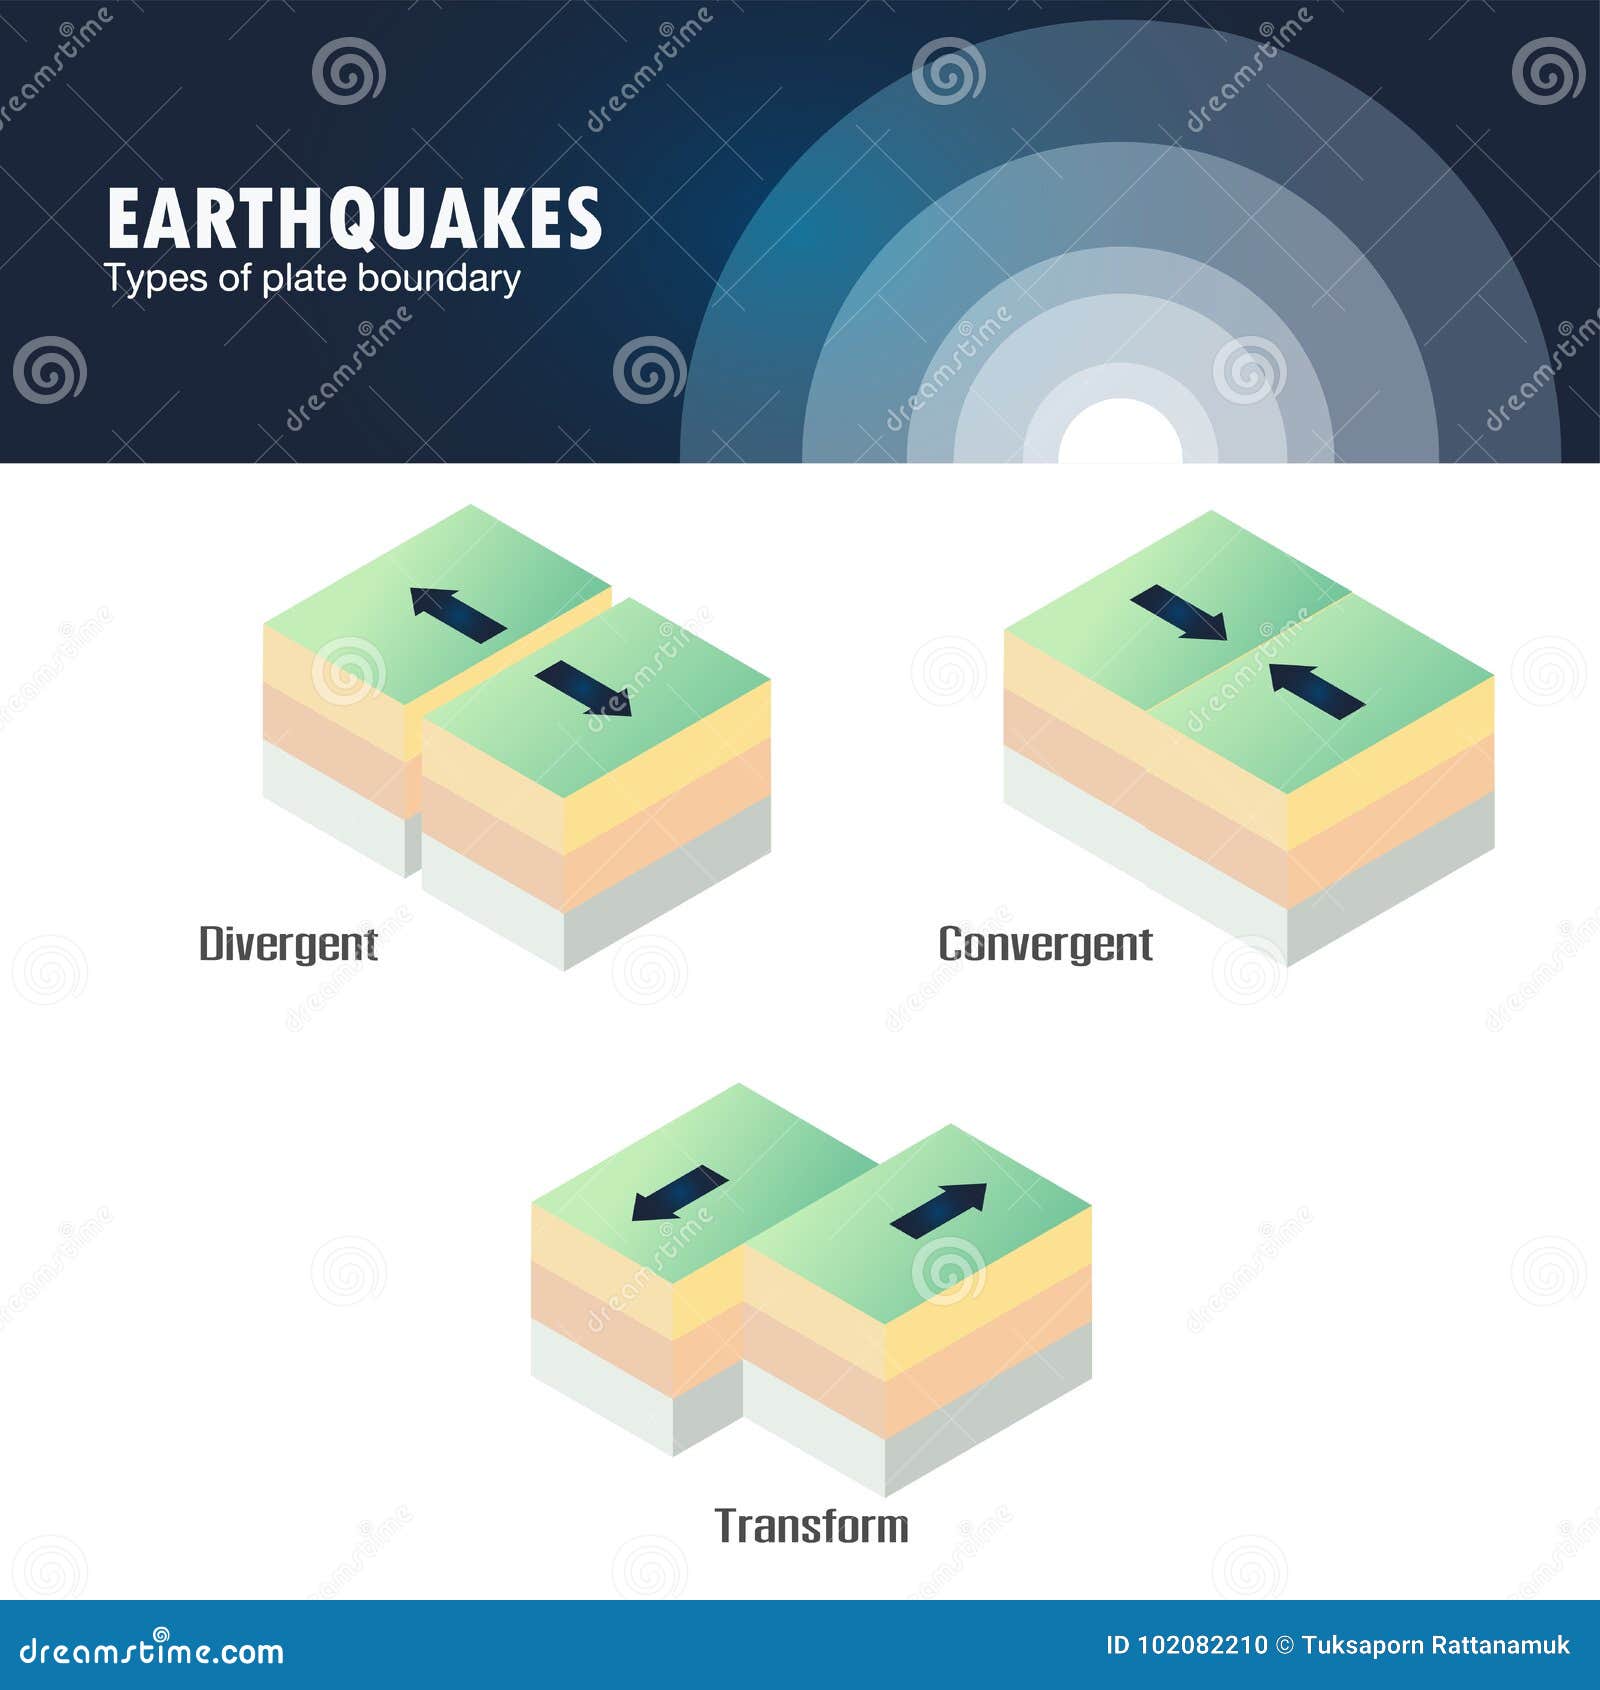 TOP5 DESIGN: O Tipo Terra, fortes como um Terremoto!